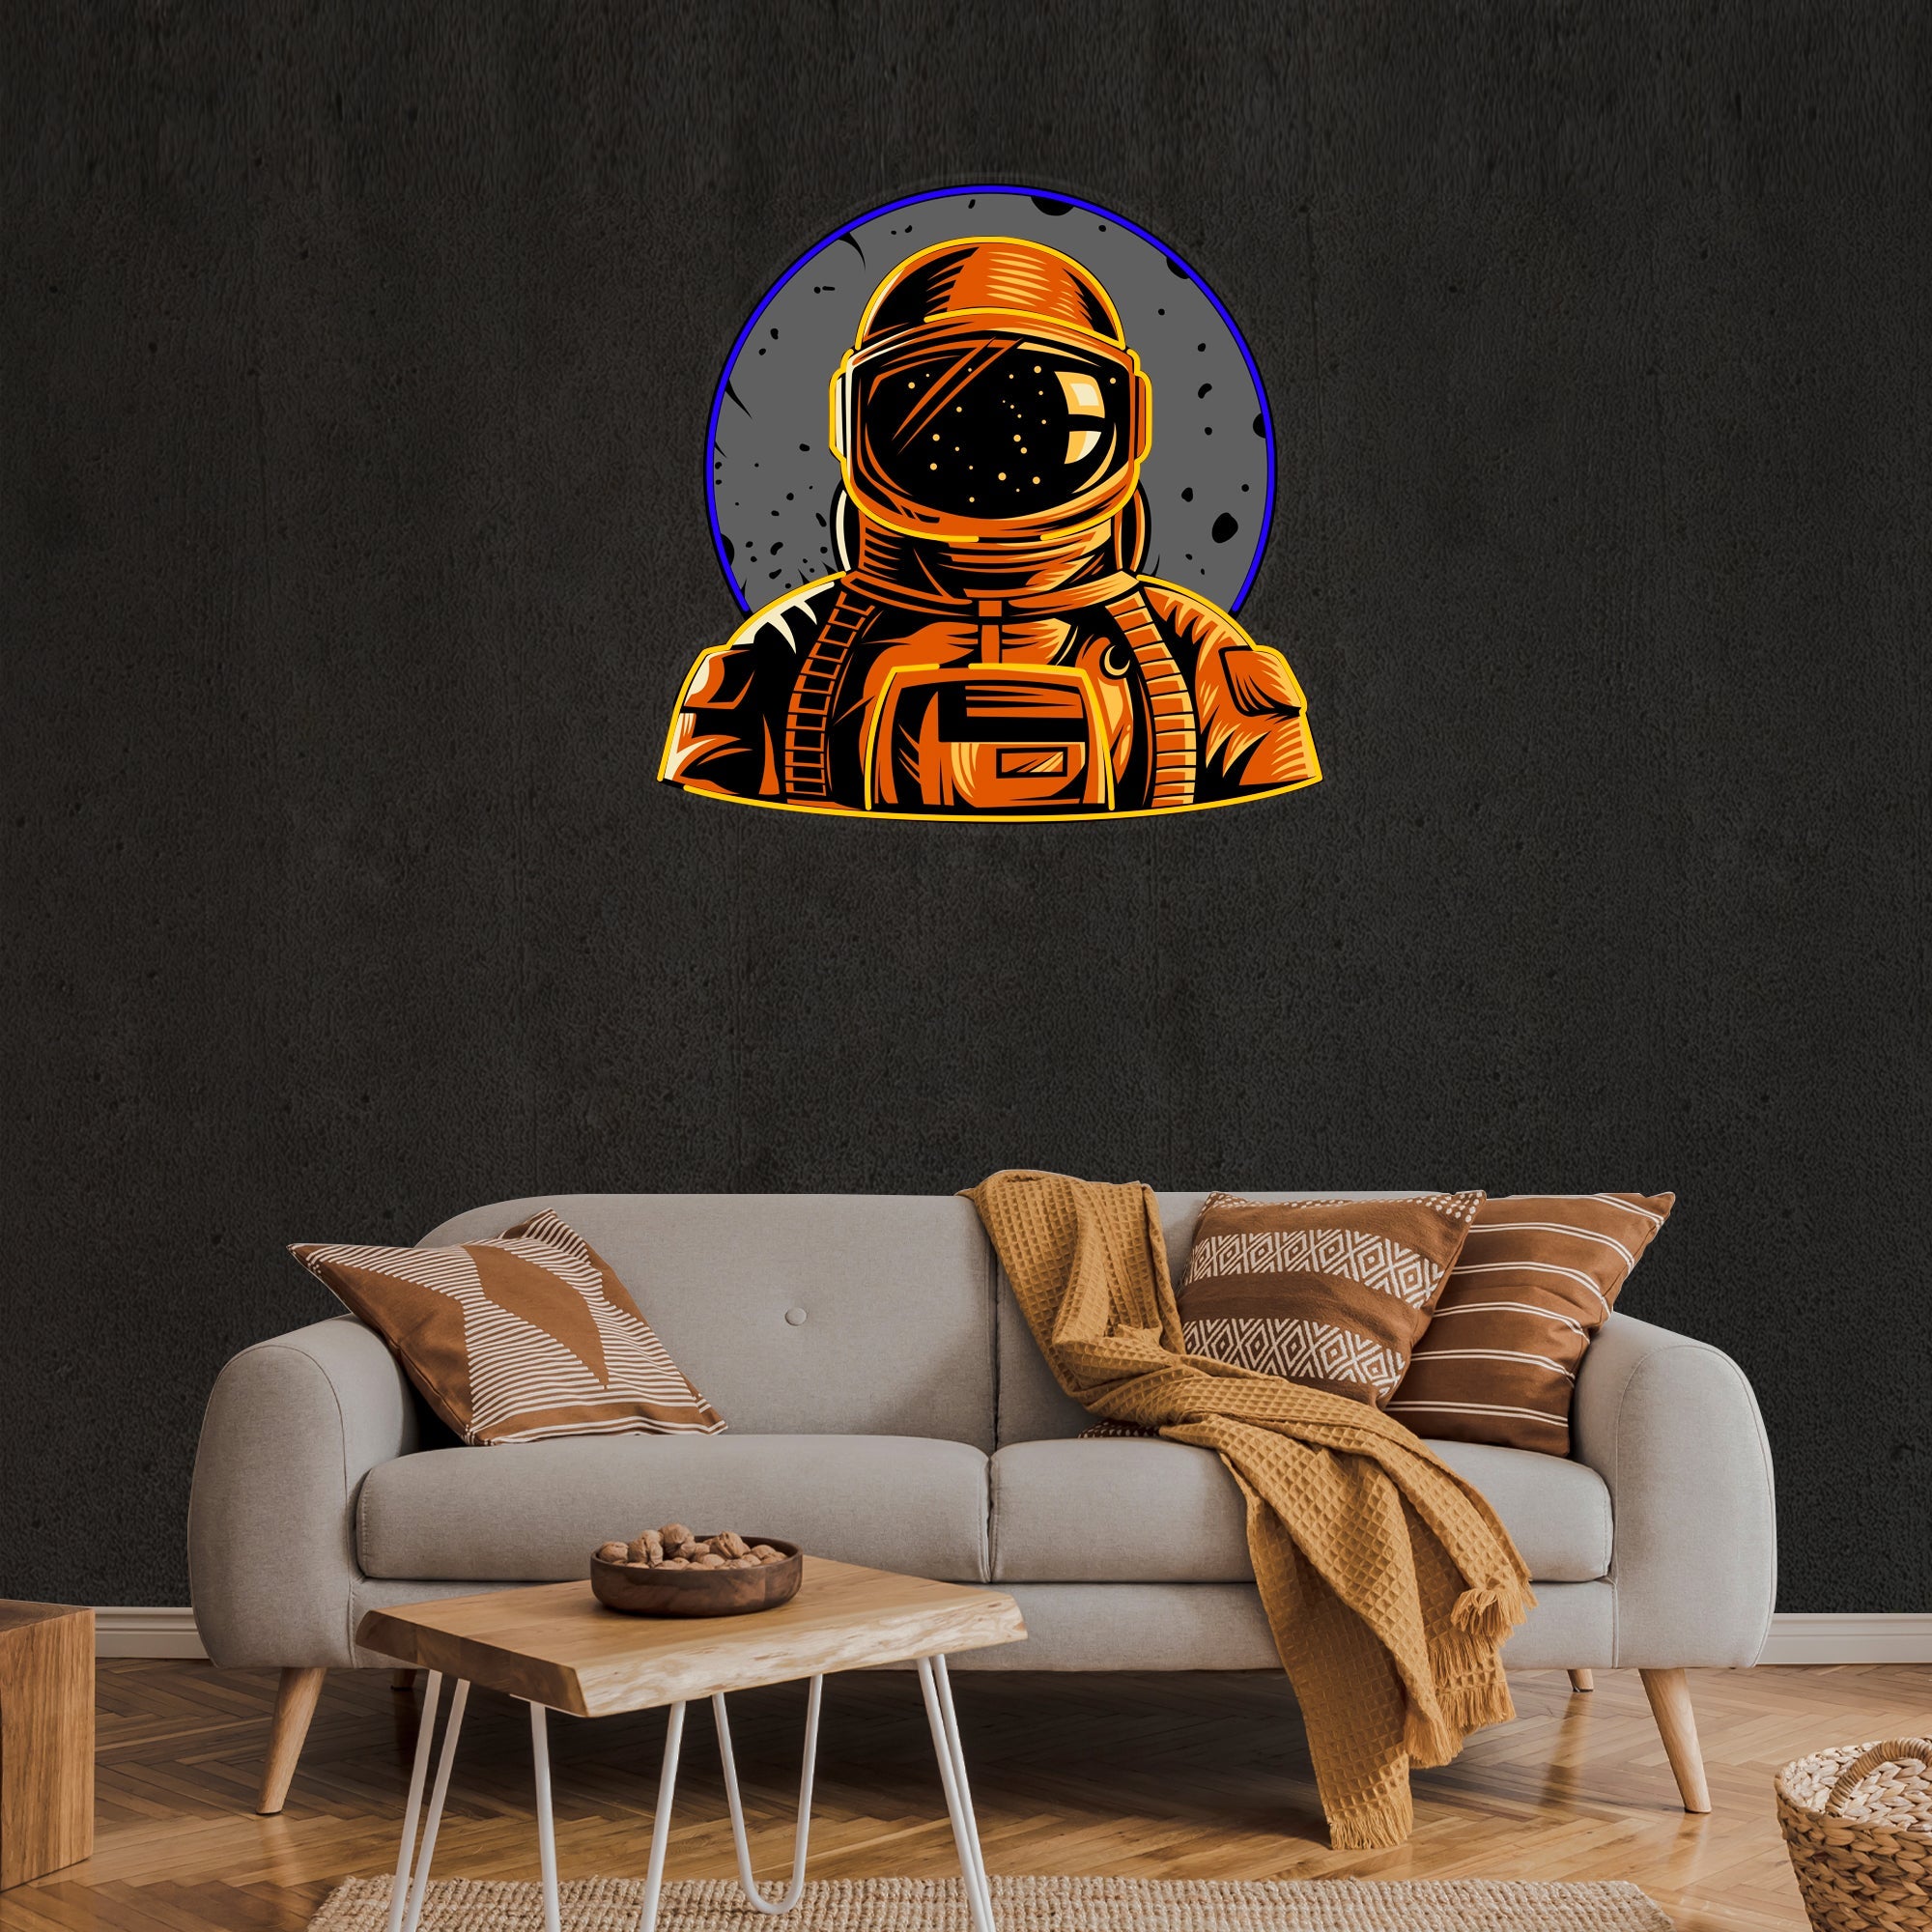 Astronaut Emblem Neon Artwork Led Neon Sign Light - Neonbir